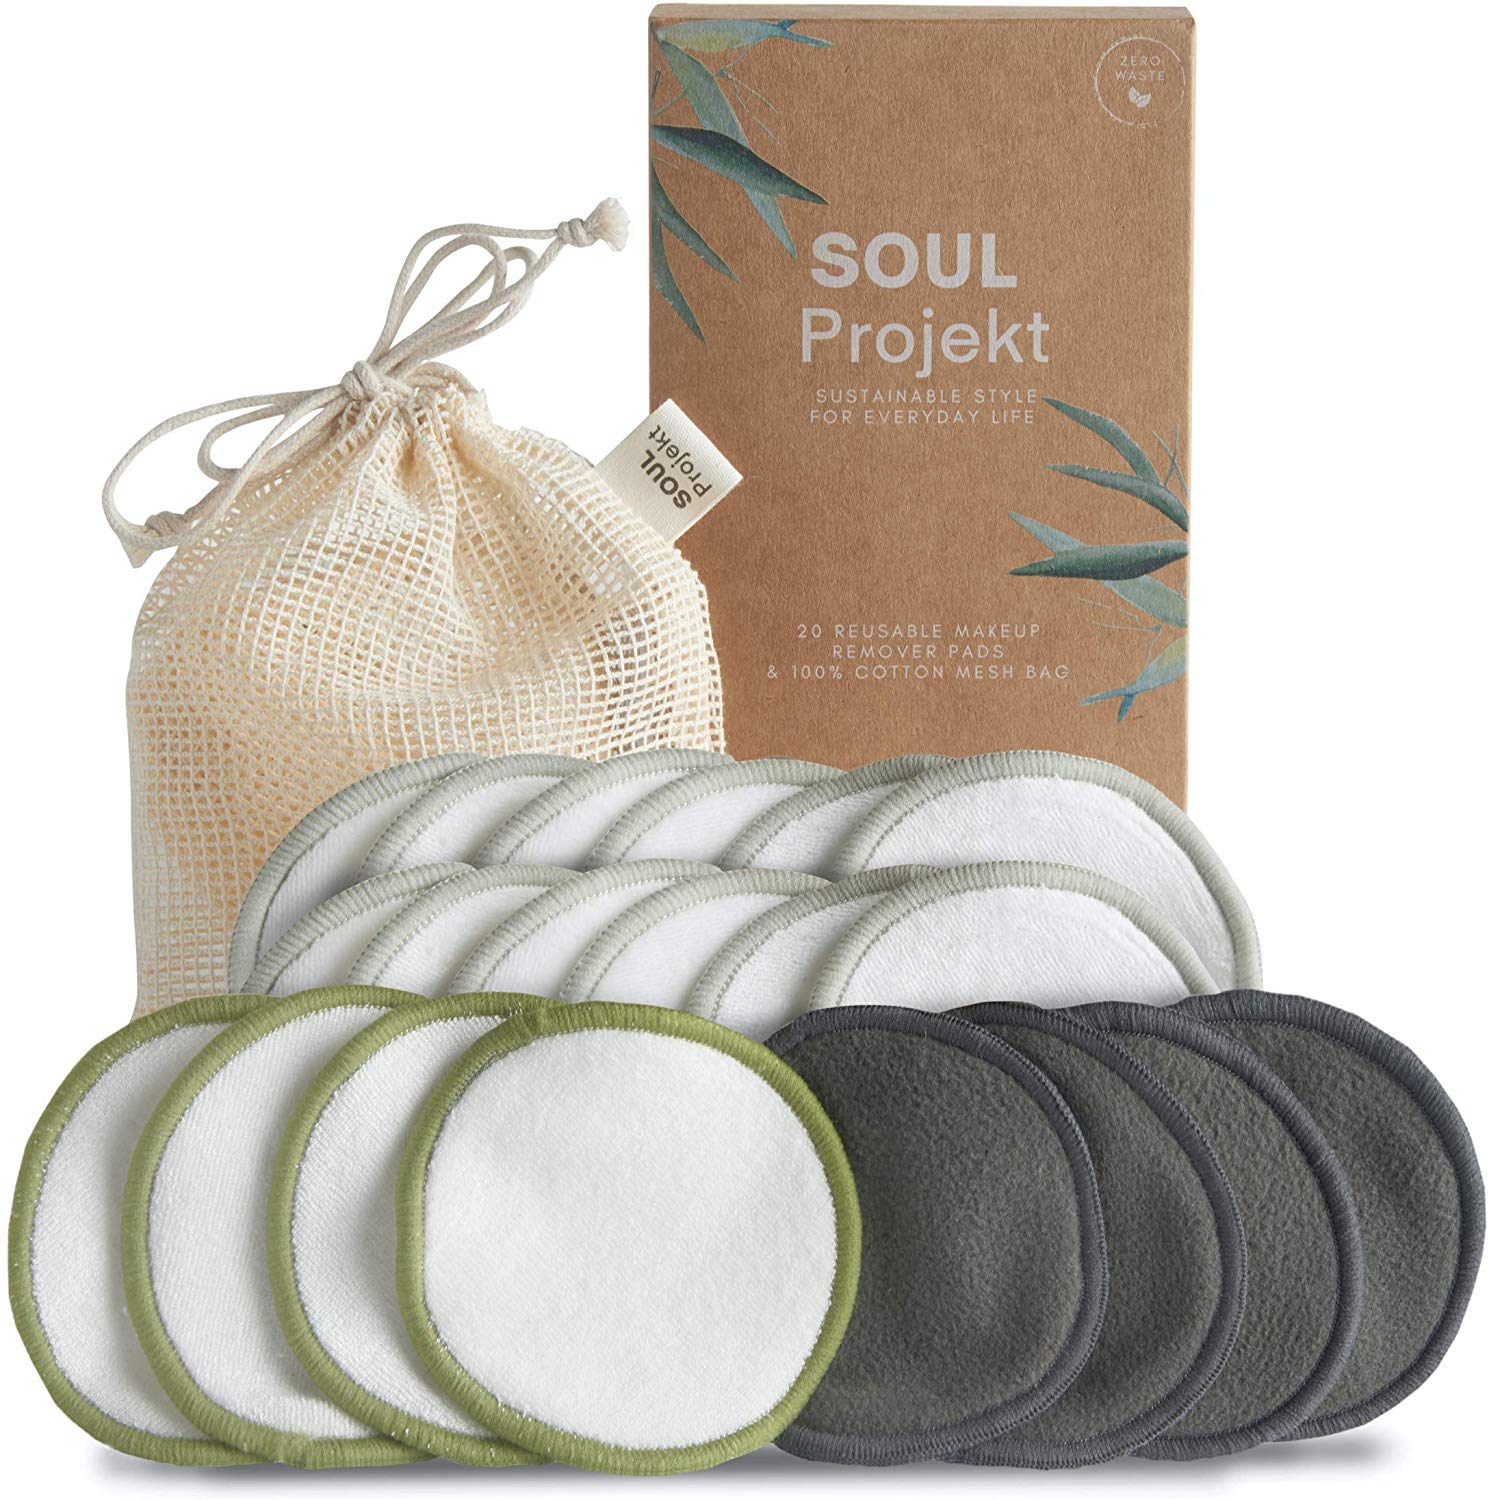 Soul Projekt Reusable Cotton Pads (20 Pack), 100% Organic Bamboo Cotton